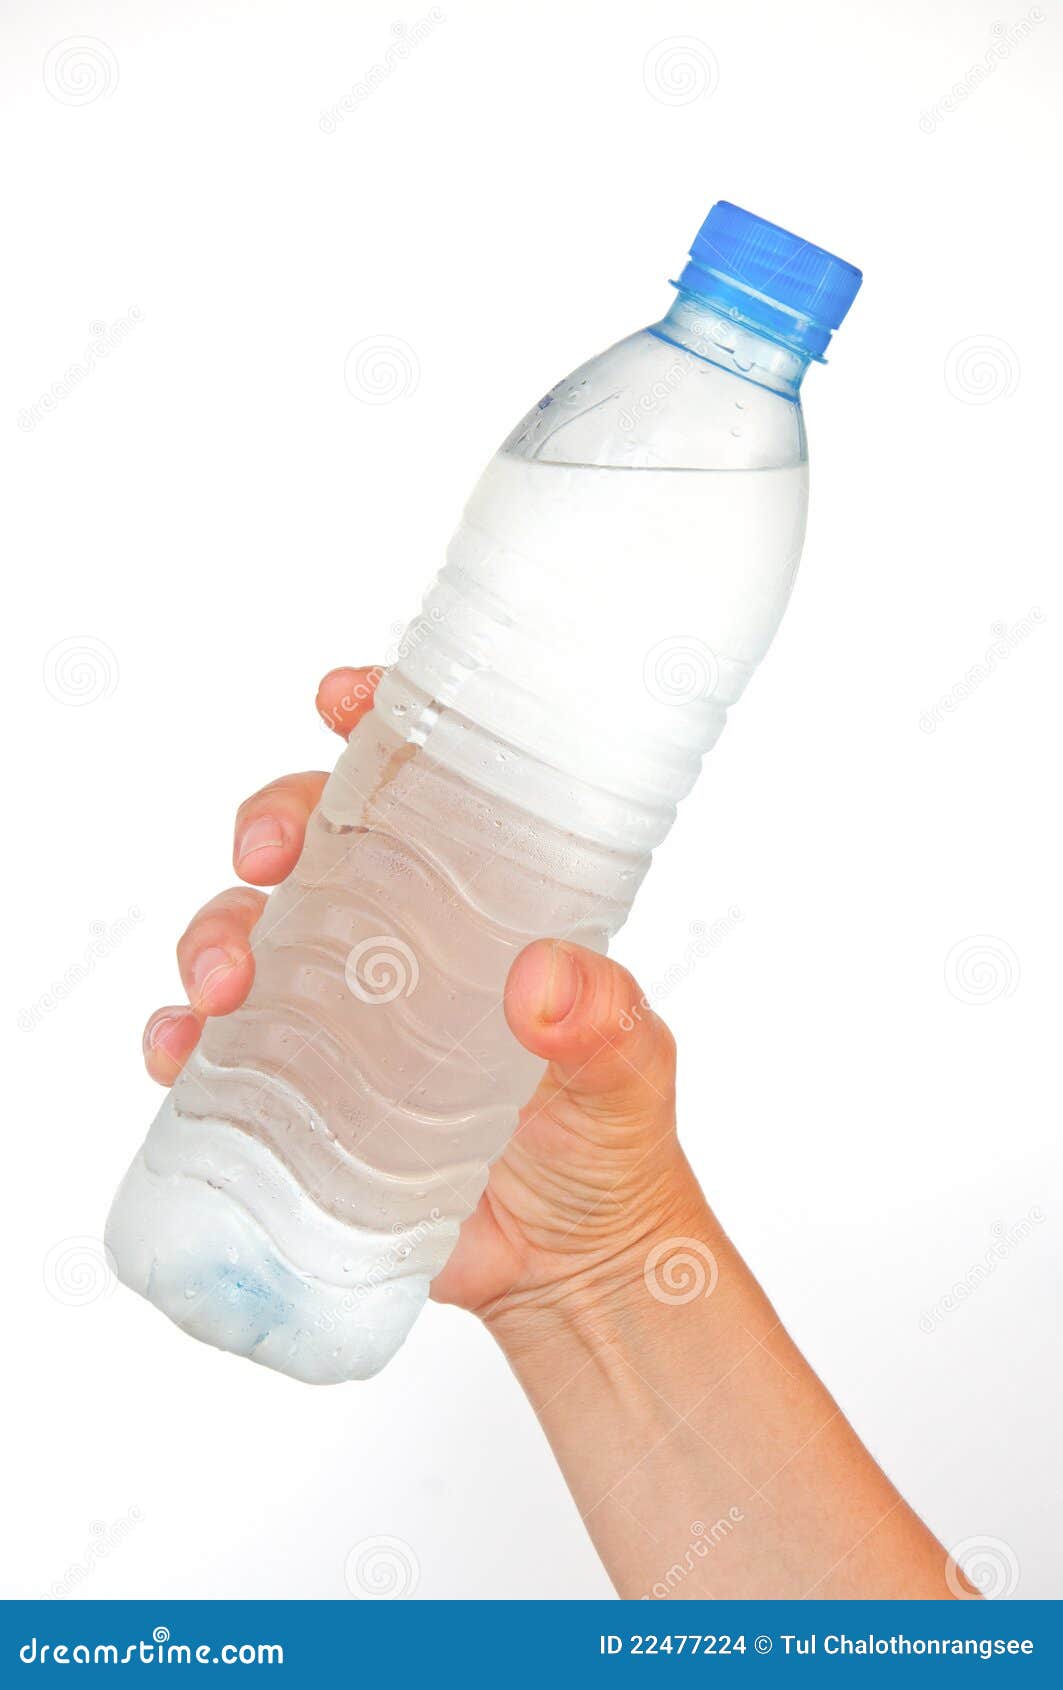 Бутылка воды в руке. Бутылка в руке. Сжатая бутылка в руке. Фото бутылки воды в руке.